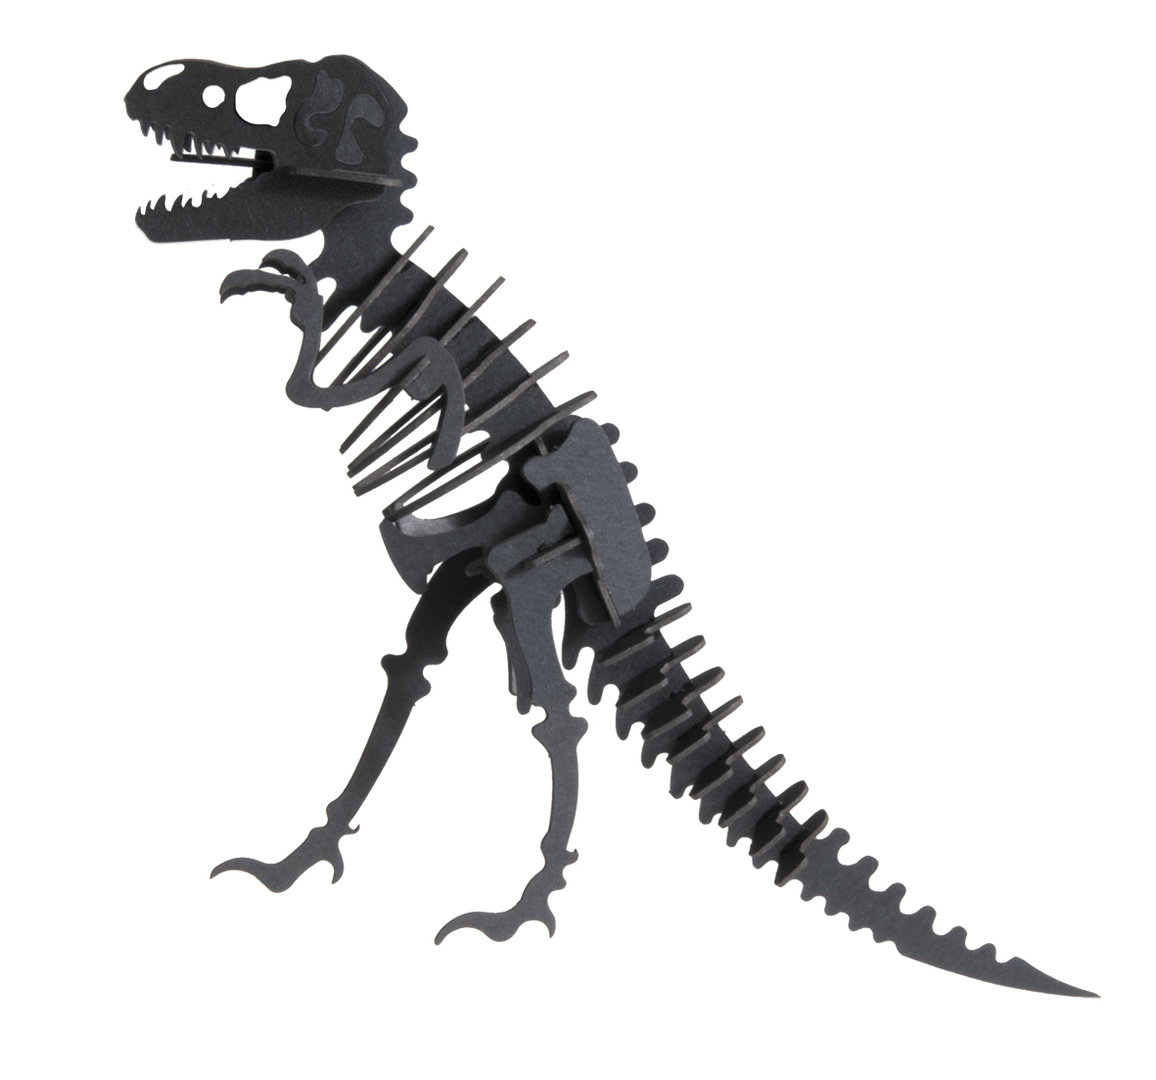 Fridolin 3D Papiermodell Tyrannussaurus Rex 